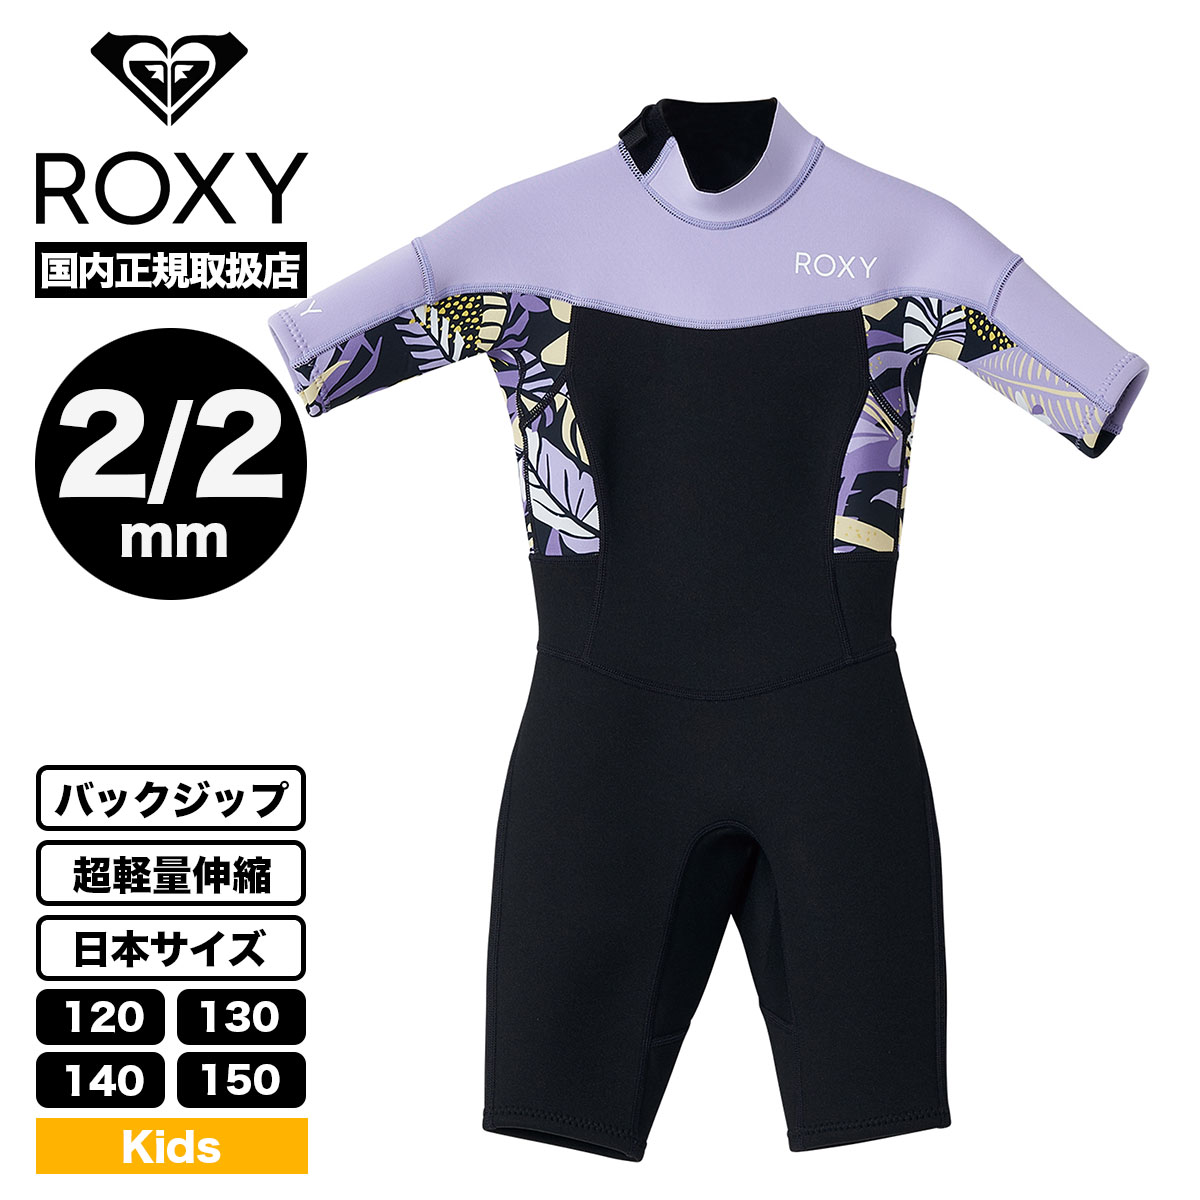 roxy サーフィン スプリング ロキシー ウェットスーツ 2mm 子供 キッズ ウェット 120 ...